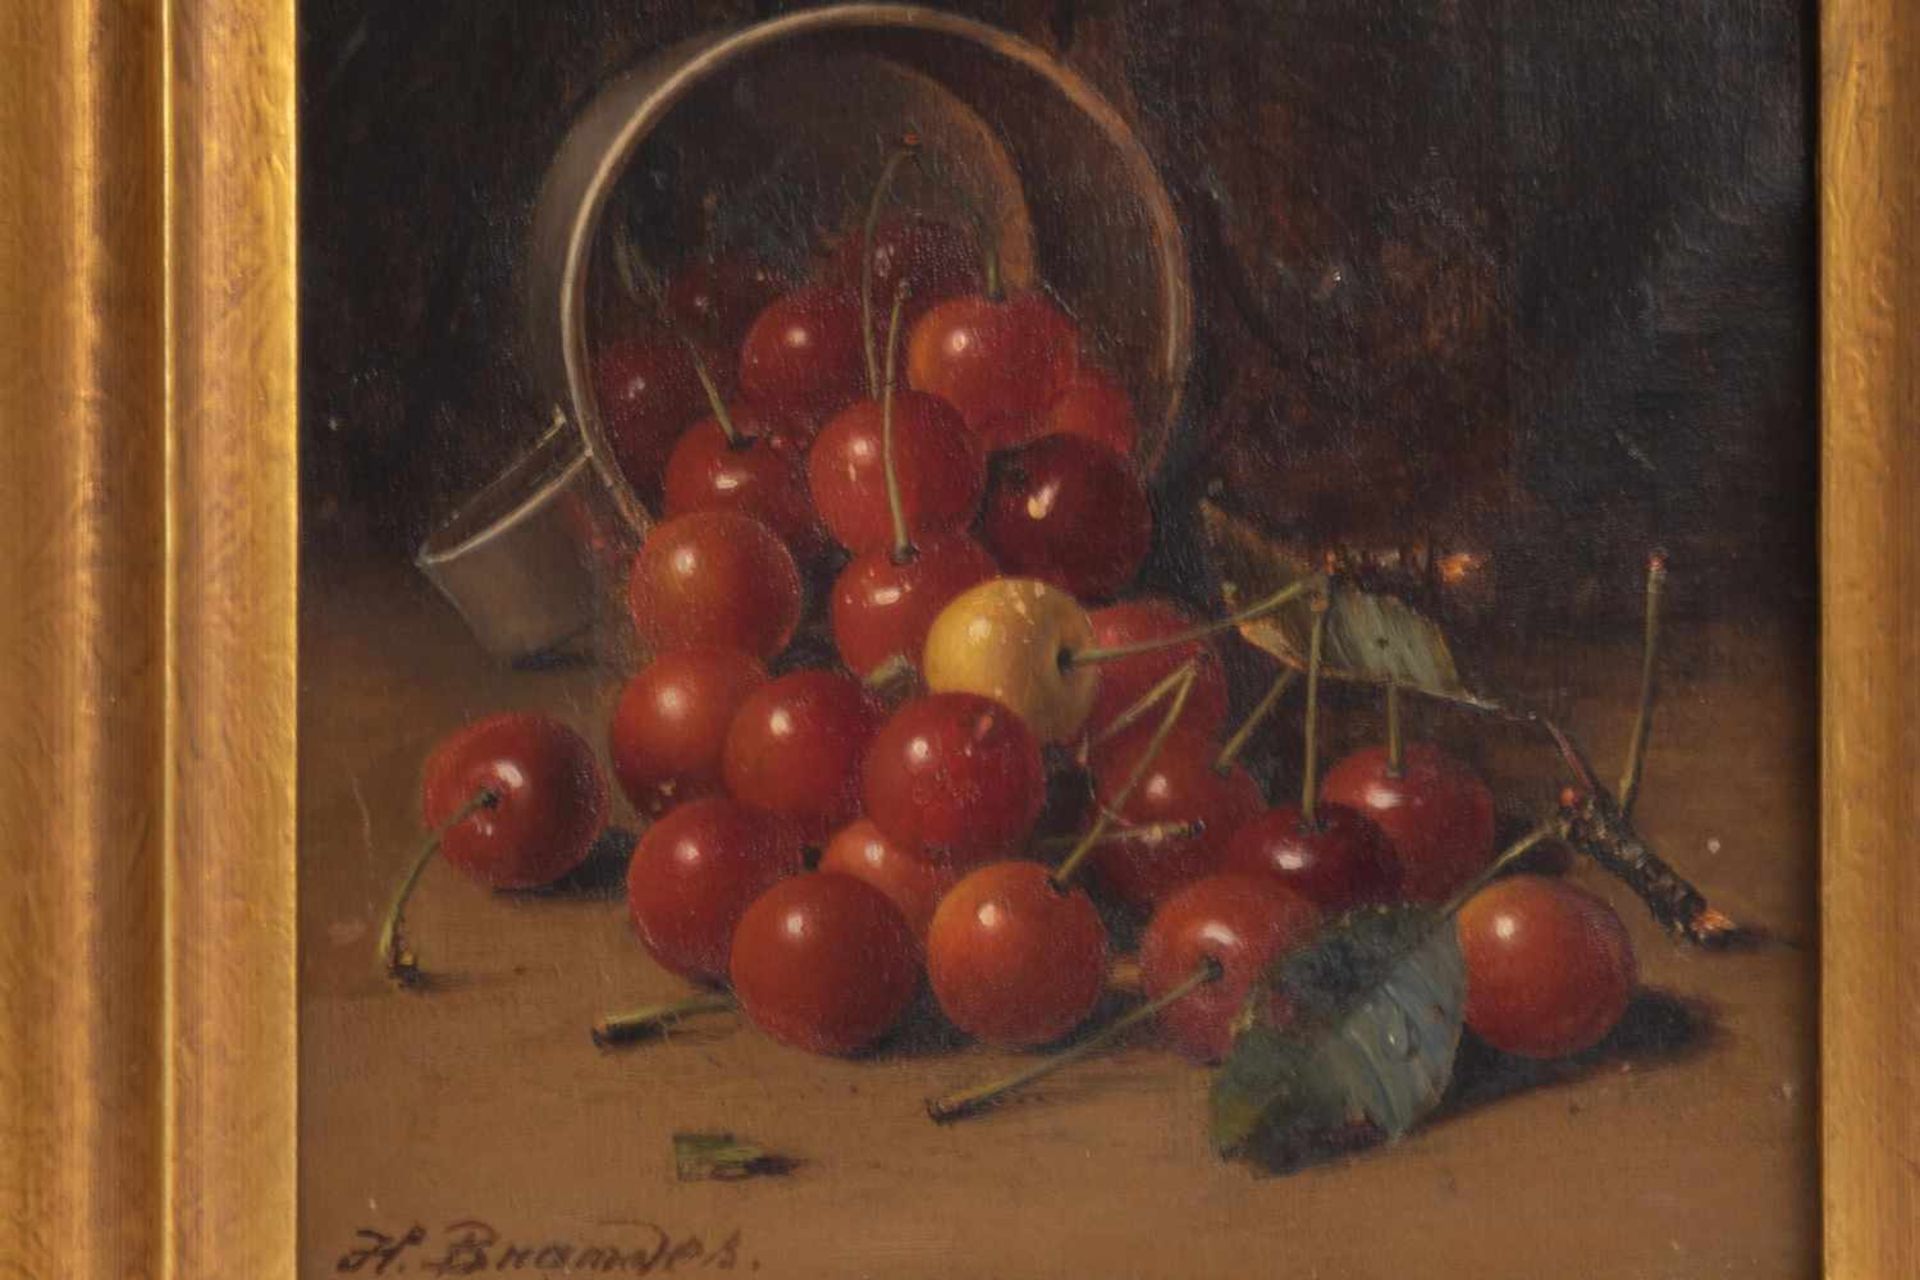 Painting of cherries - Image 2 of 5